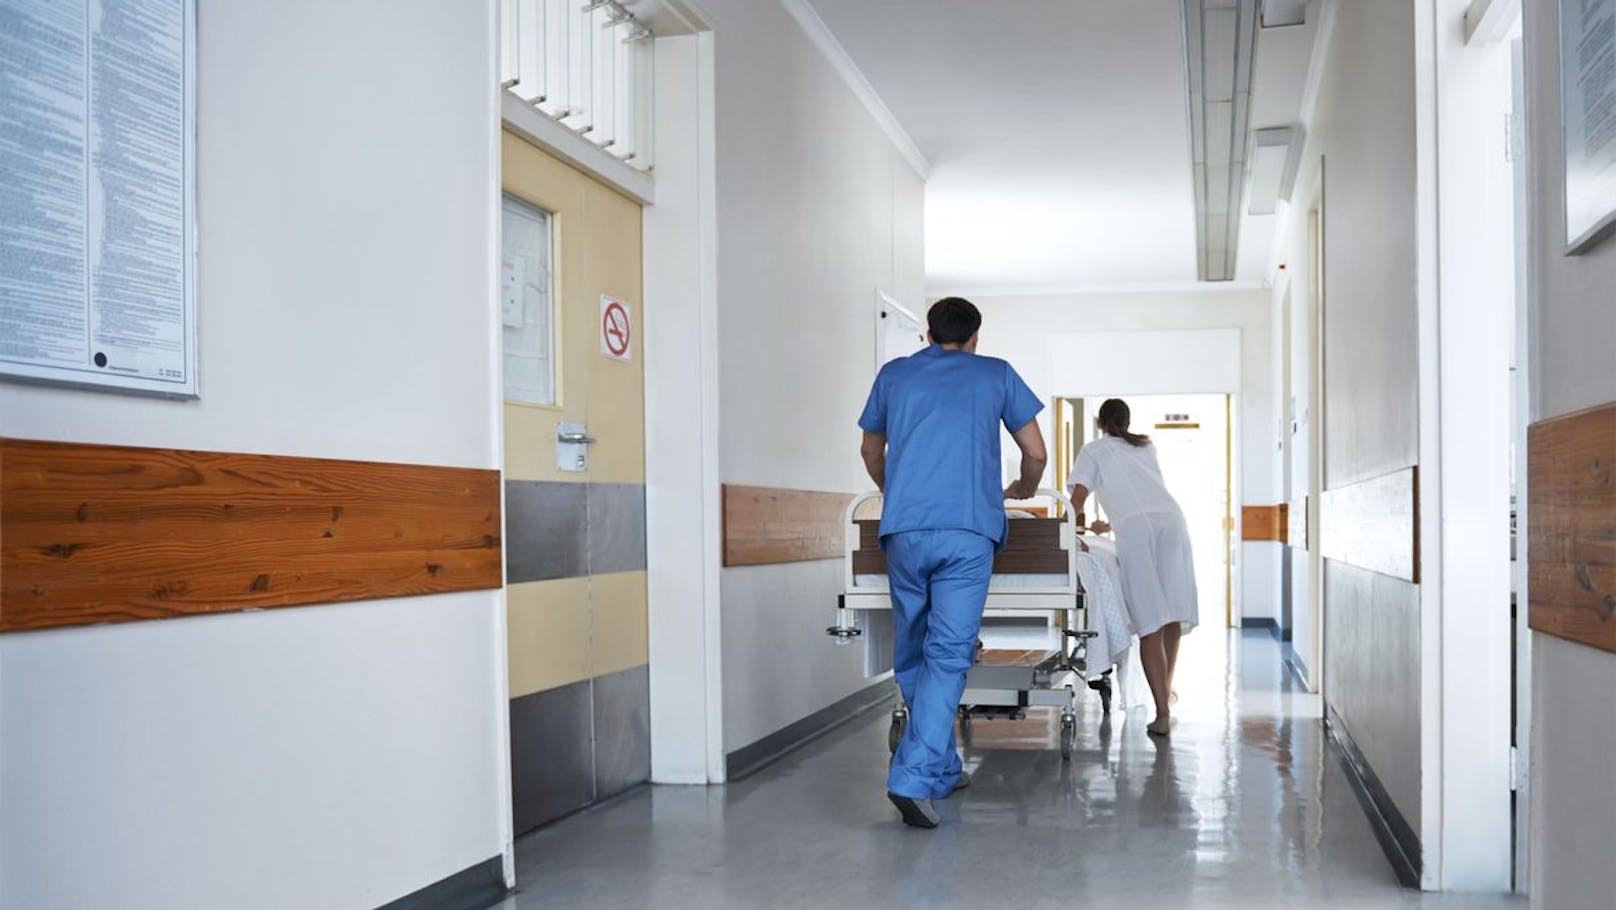 Tritt in Genitalien – Attacke in Spital endet tödlich